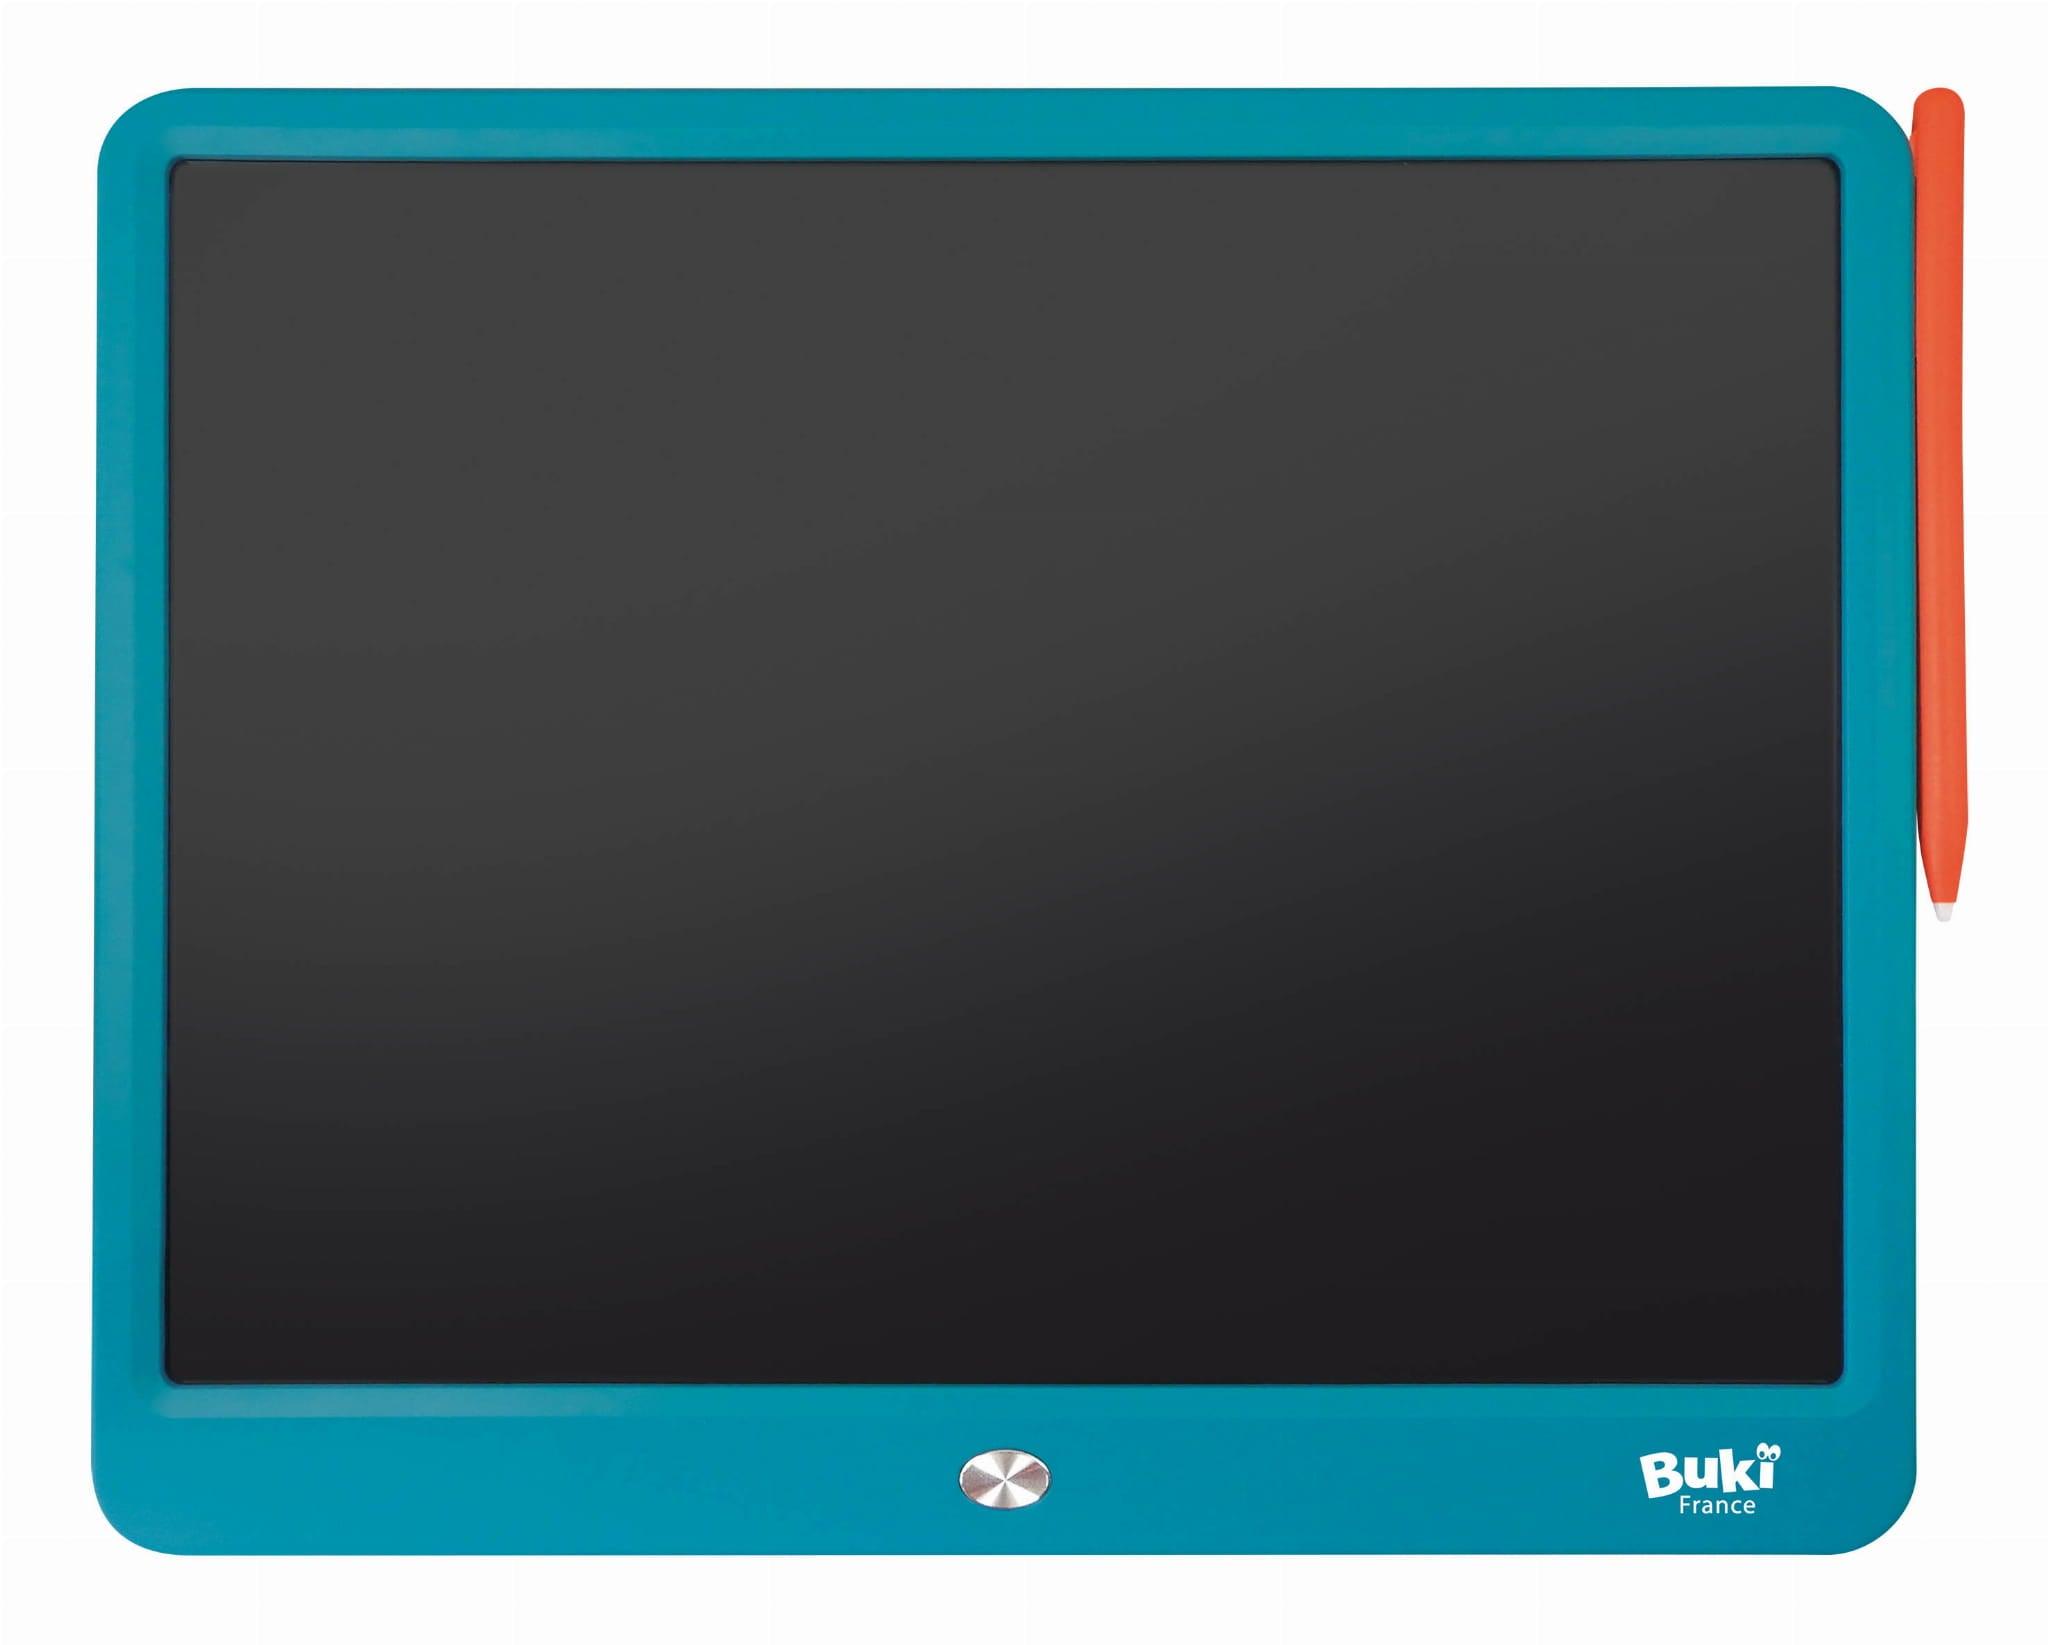 Buki: tablet do rysowania Drawing Tablet XL - Noski Noski